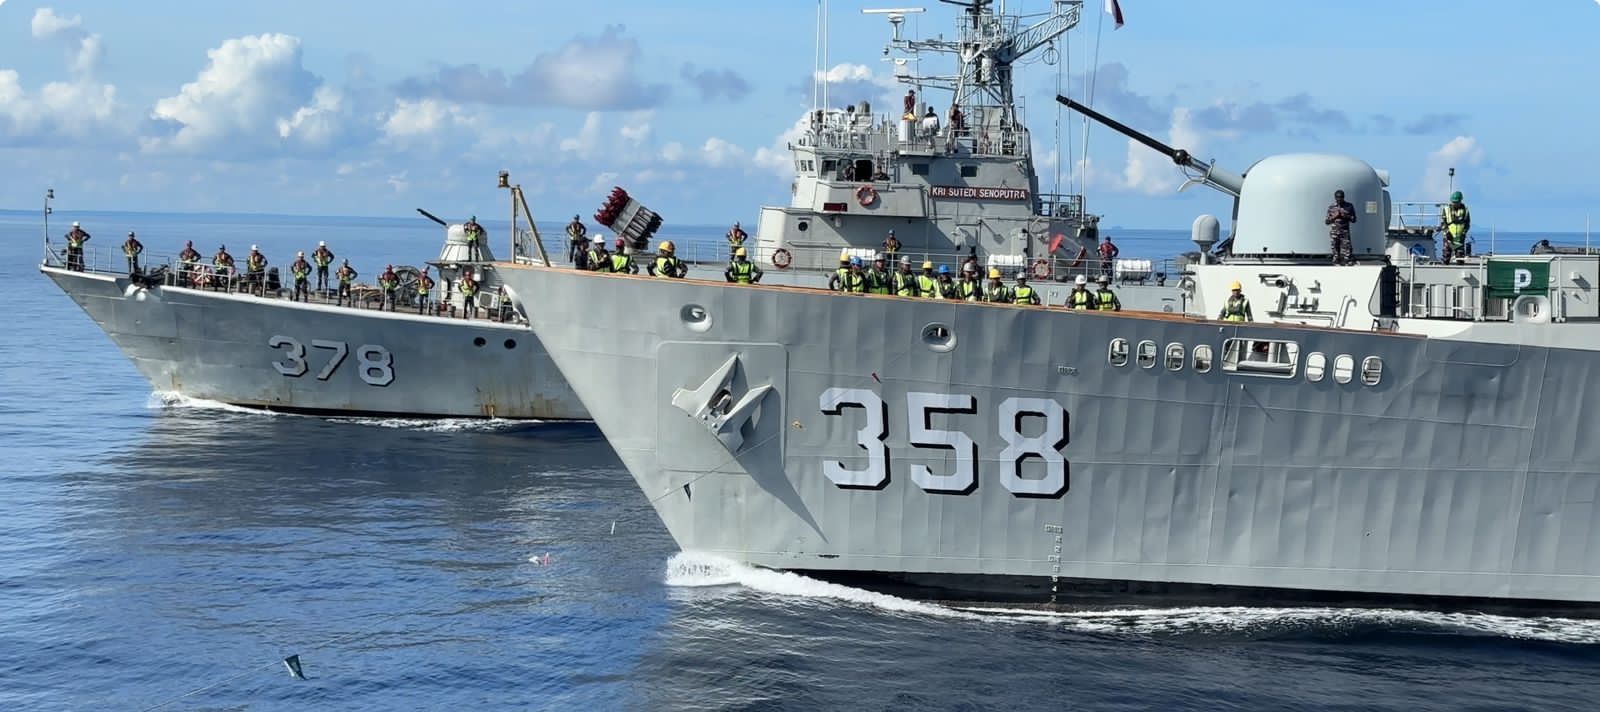 TNI AL Kerahkan 3 Kapal Perang Korvet untuk Latihan di Laut Natuna Utara